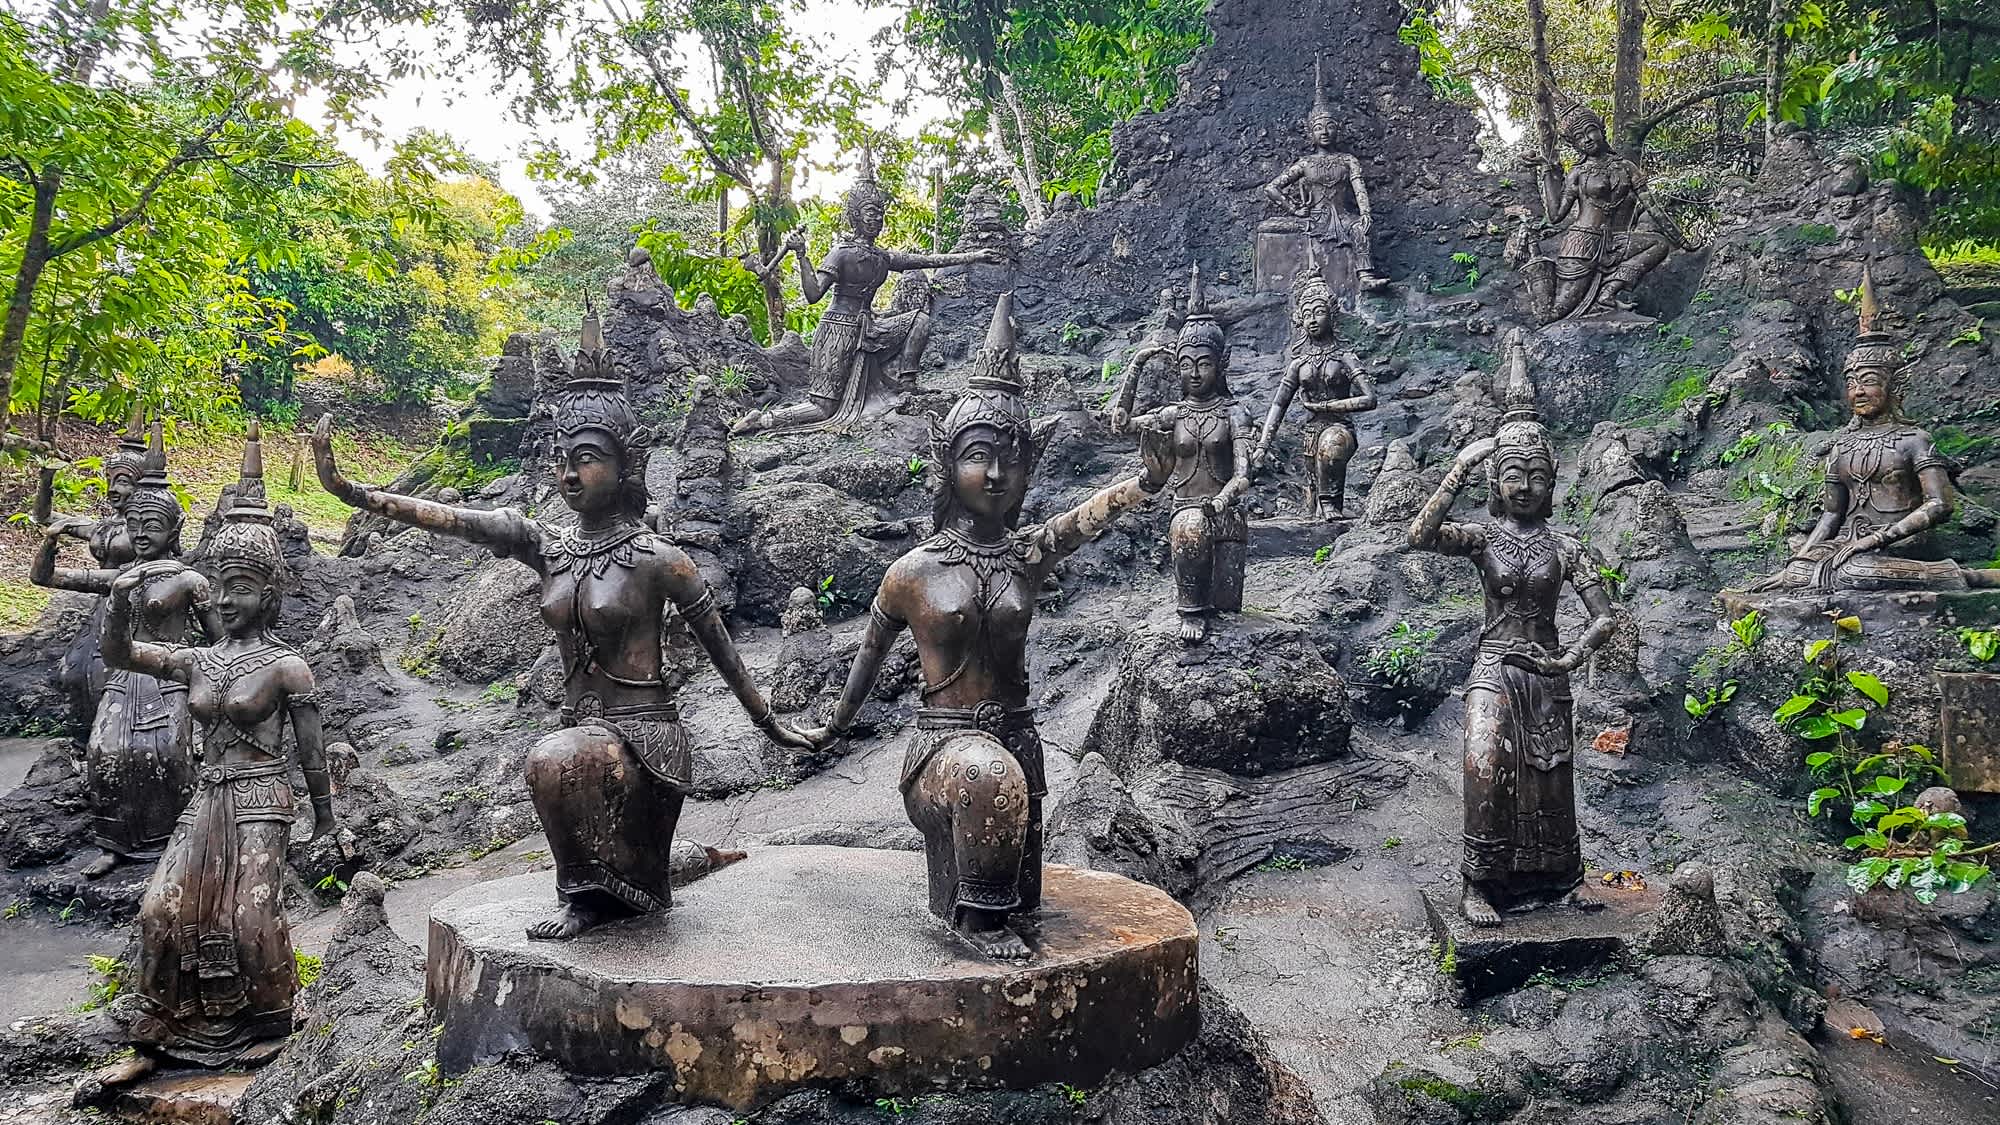 Buddha-Statuen im Magic Buddha Garden auf Koh Samui, Surat Thani, Thailand.

